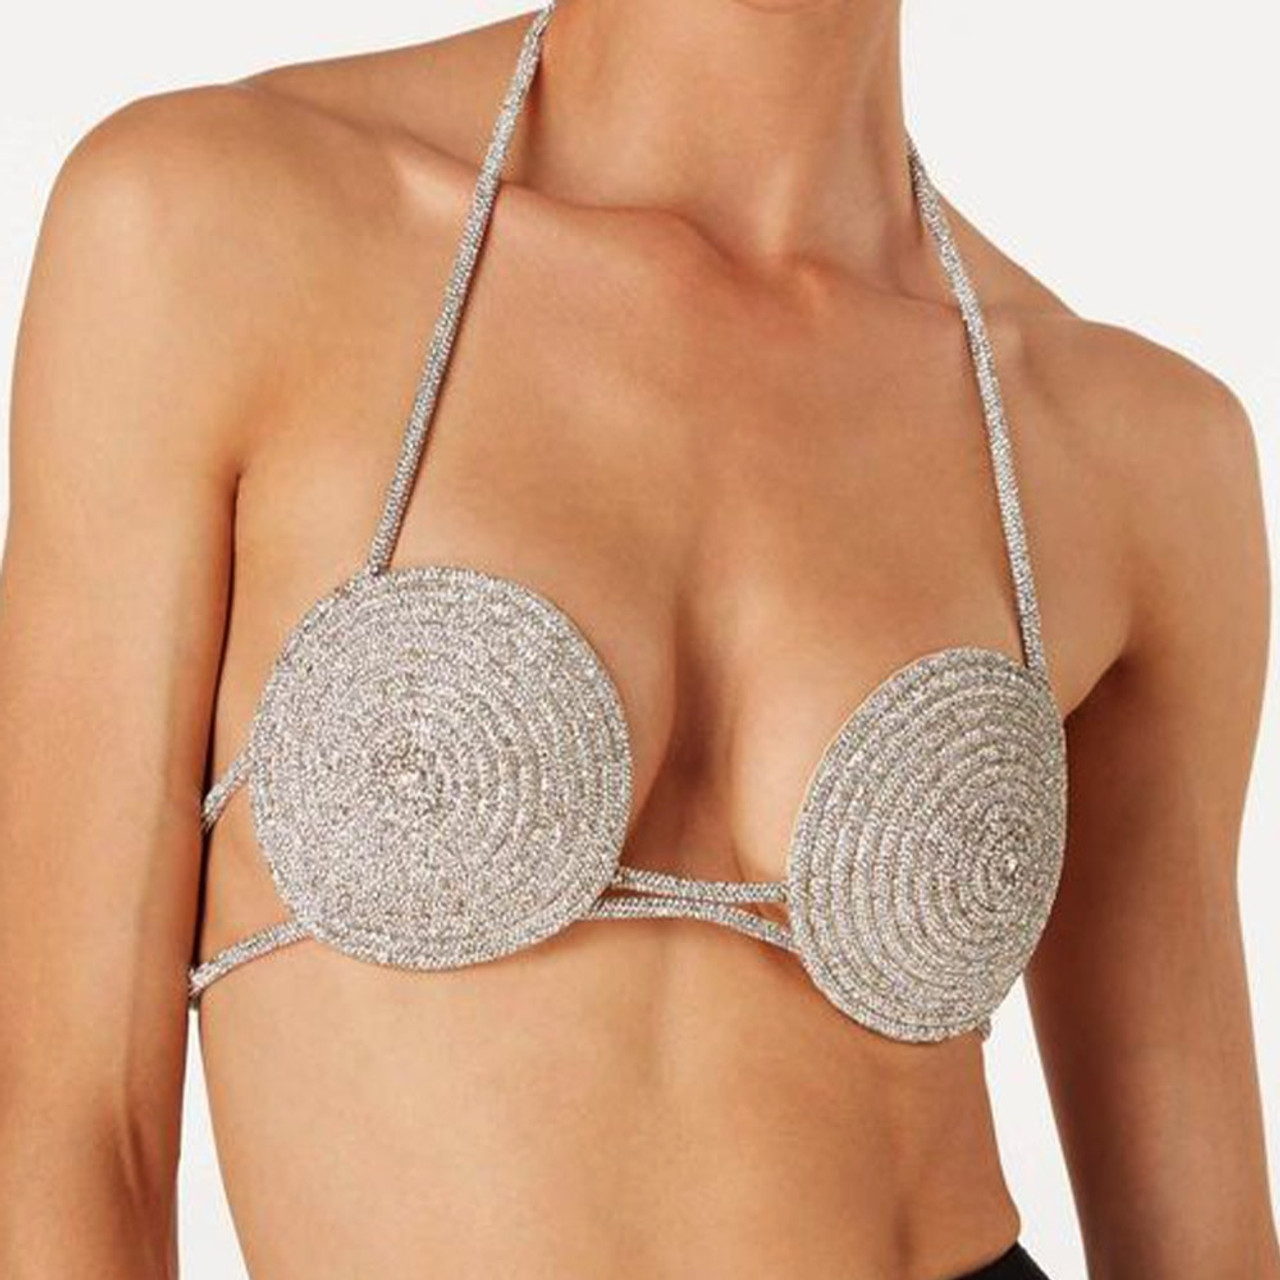 Stonefans Sexy Body Jewlery Bralette Chain Top For Women Leaf Bikini  Crystal Underwear Chains Lingerie Body Jewellery T200508 From Xue08, $9.07